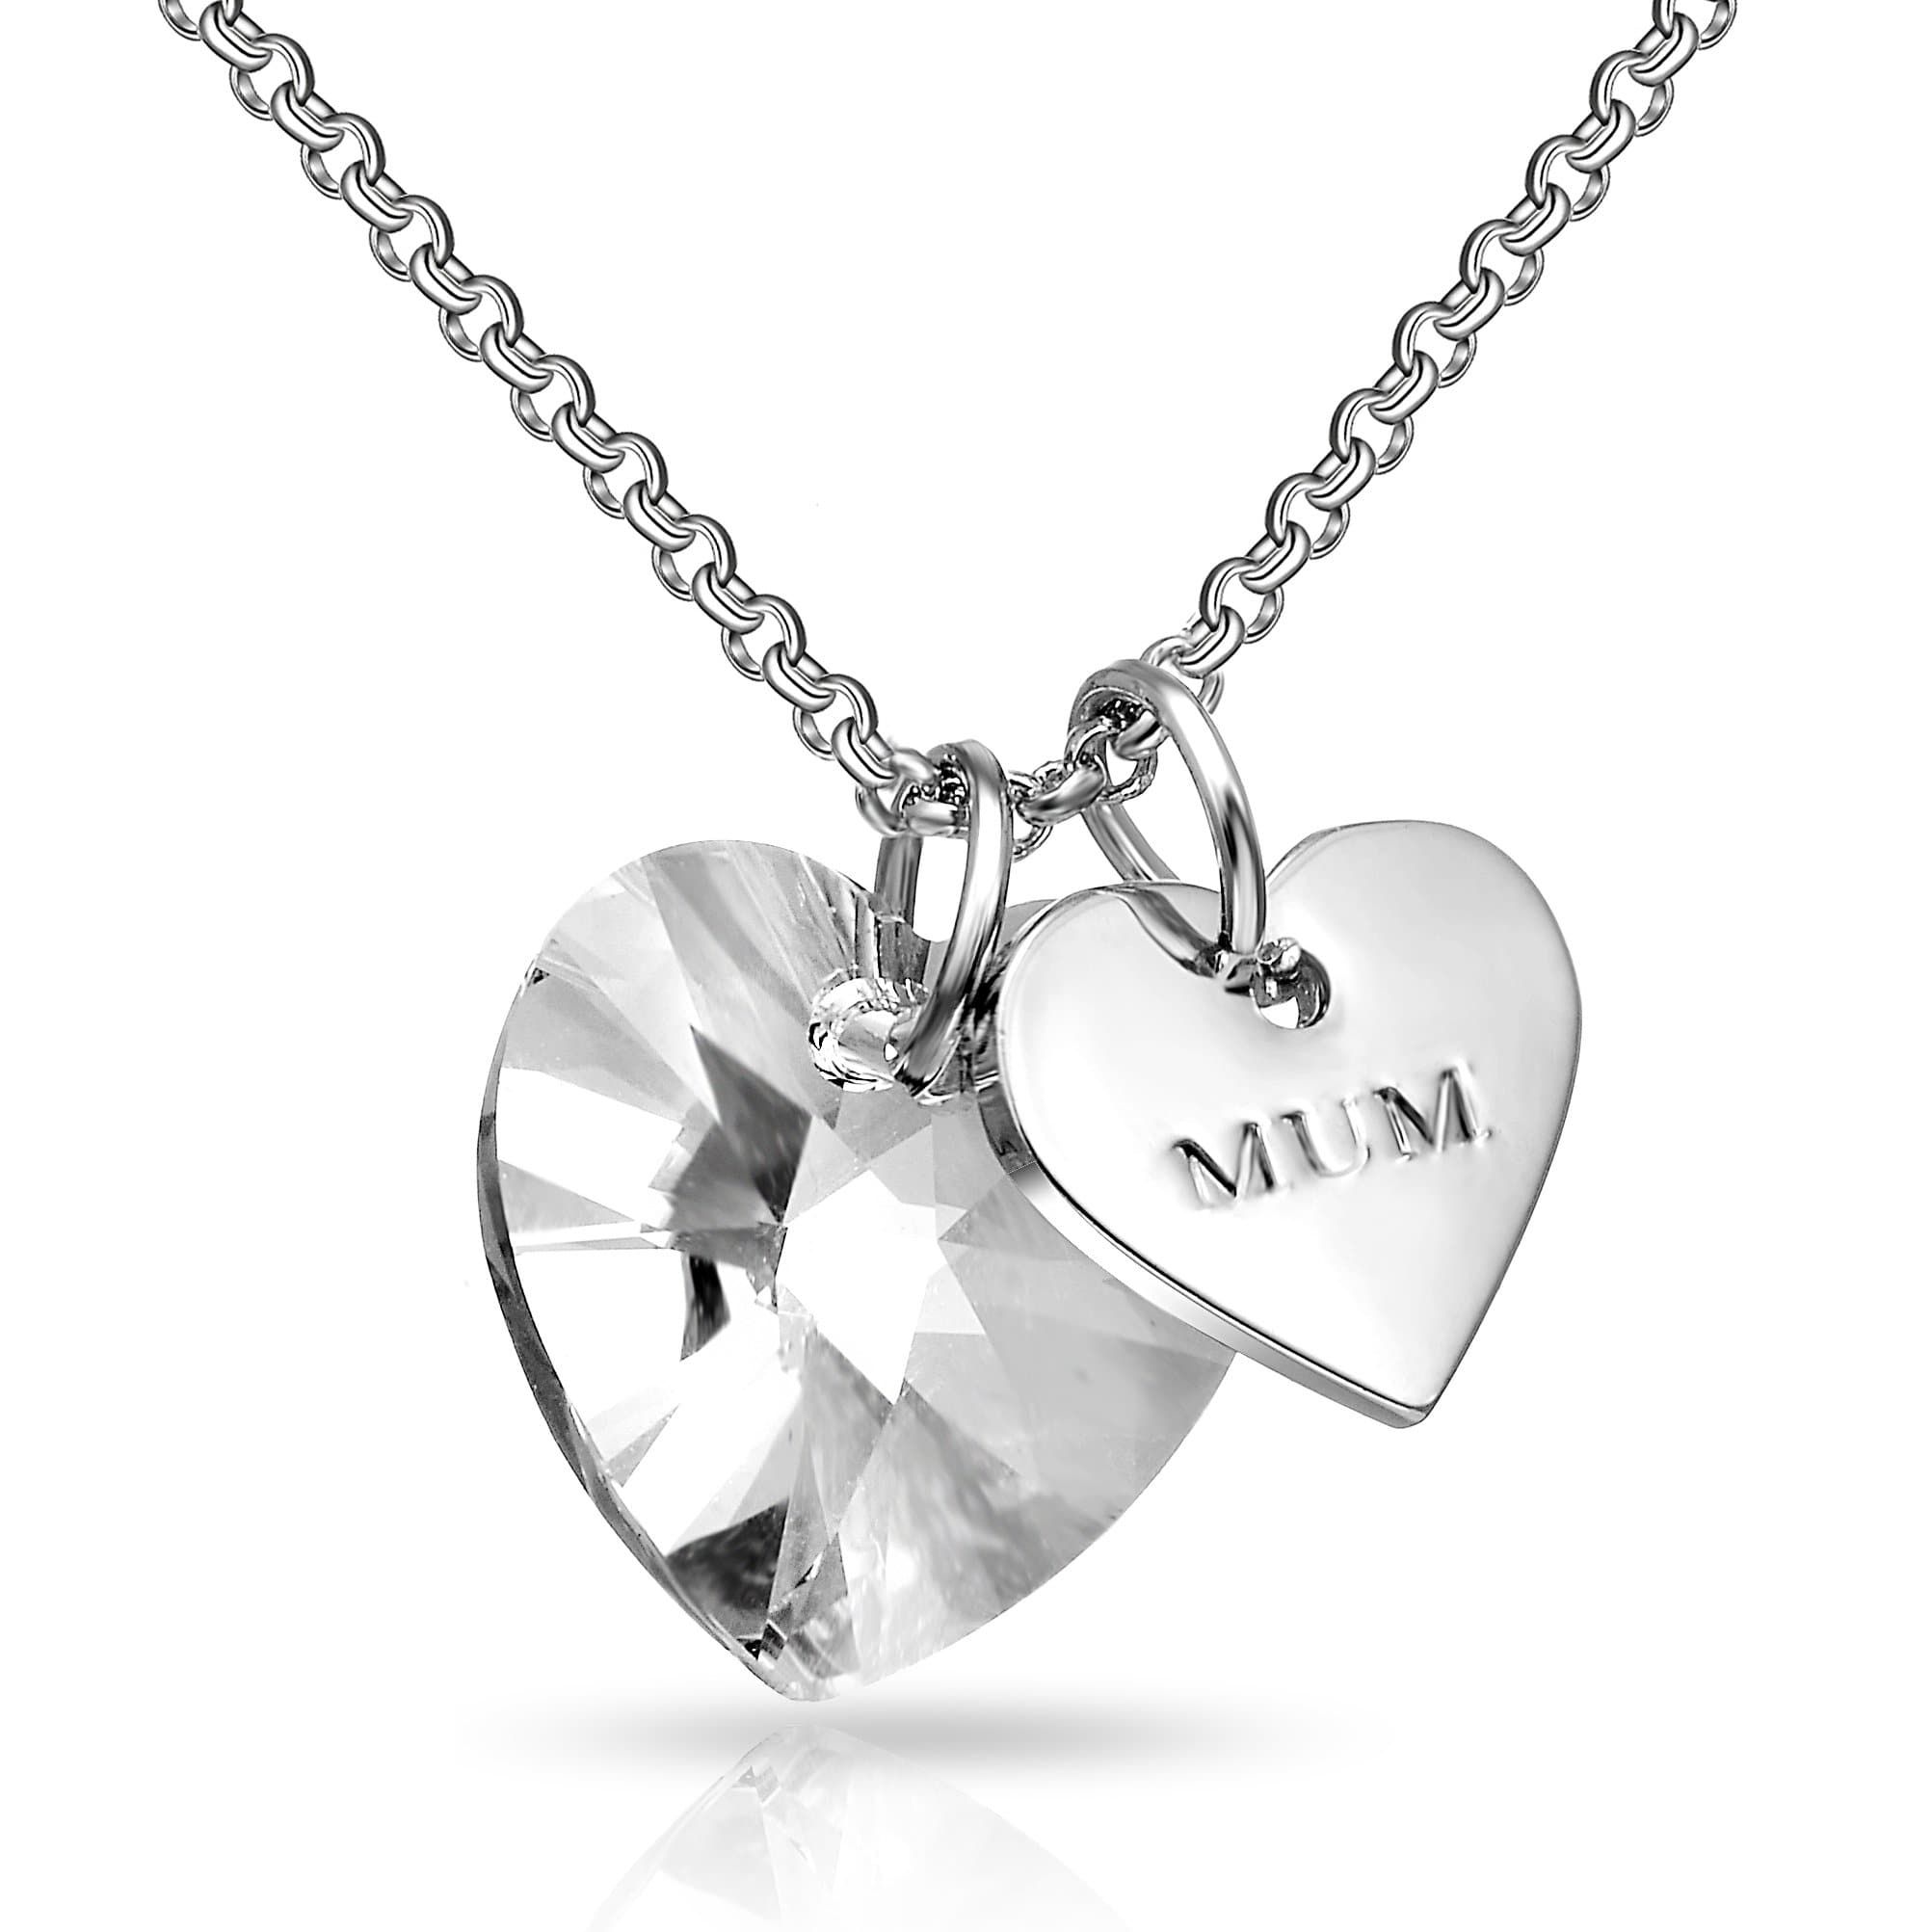 Mum Heart Necklace Created with Zircondia® Crystals by Philip Jones Jewellery